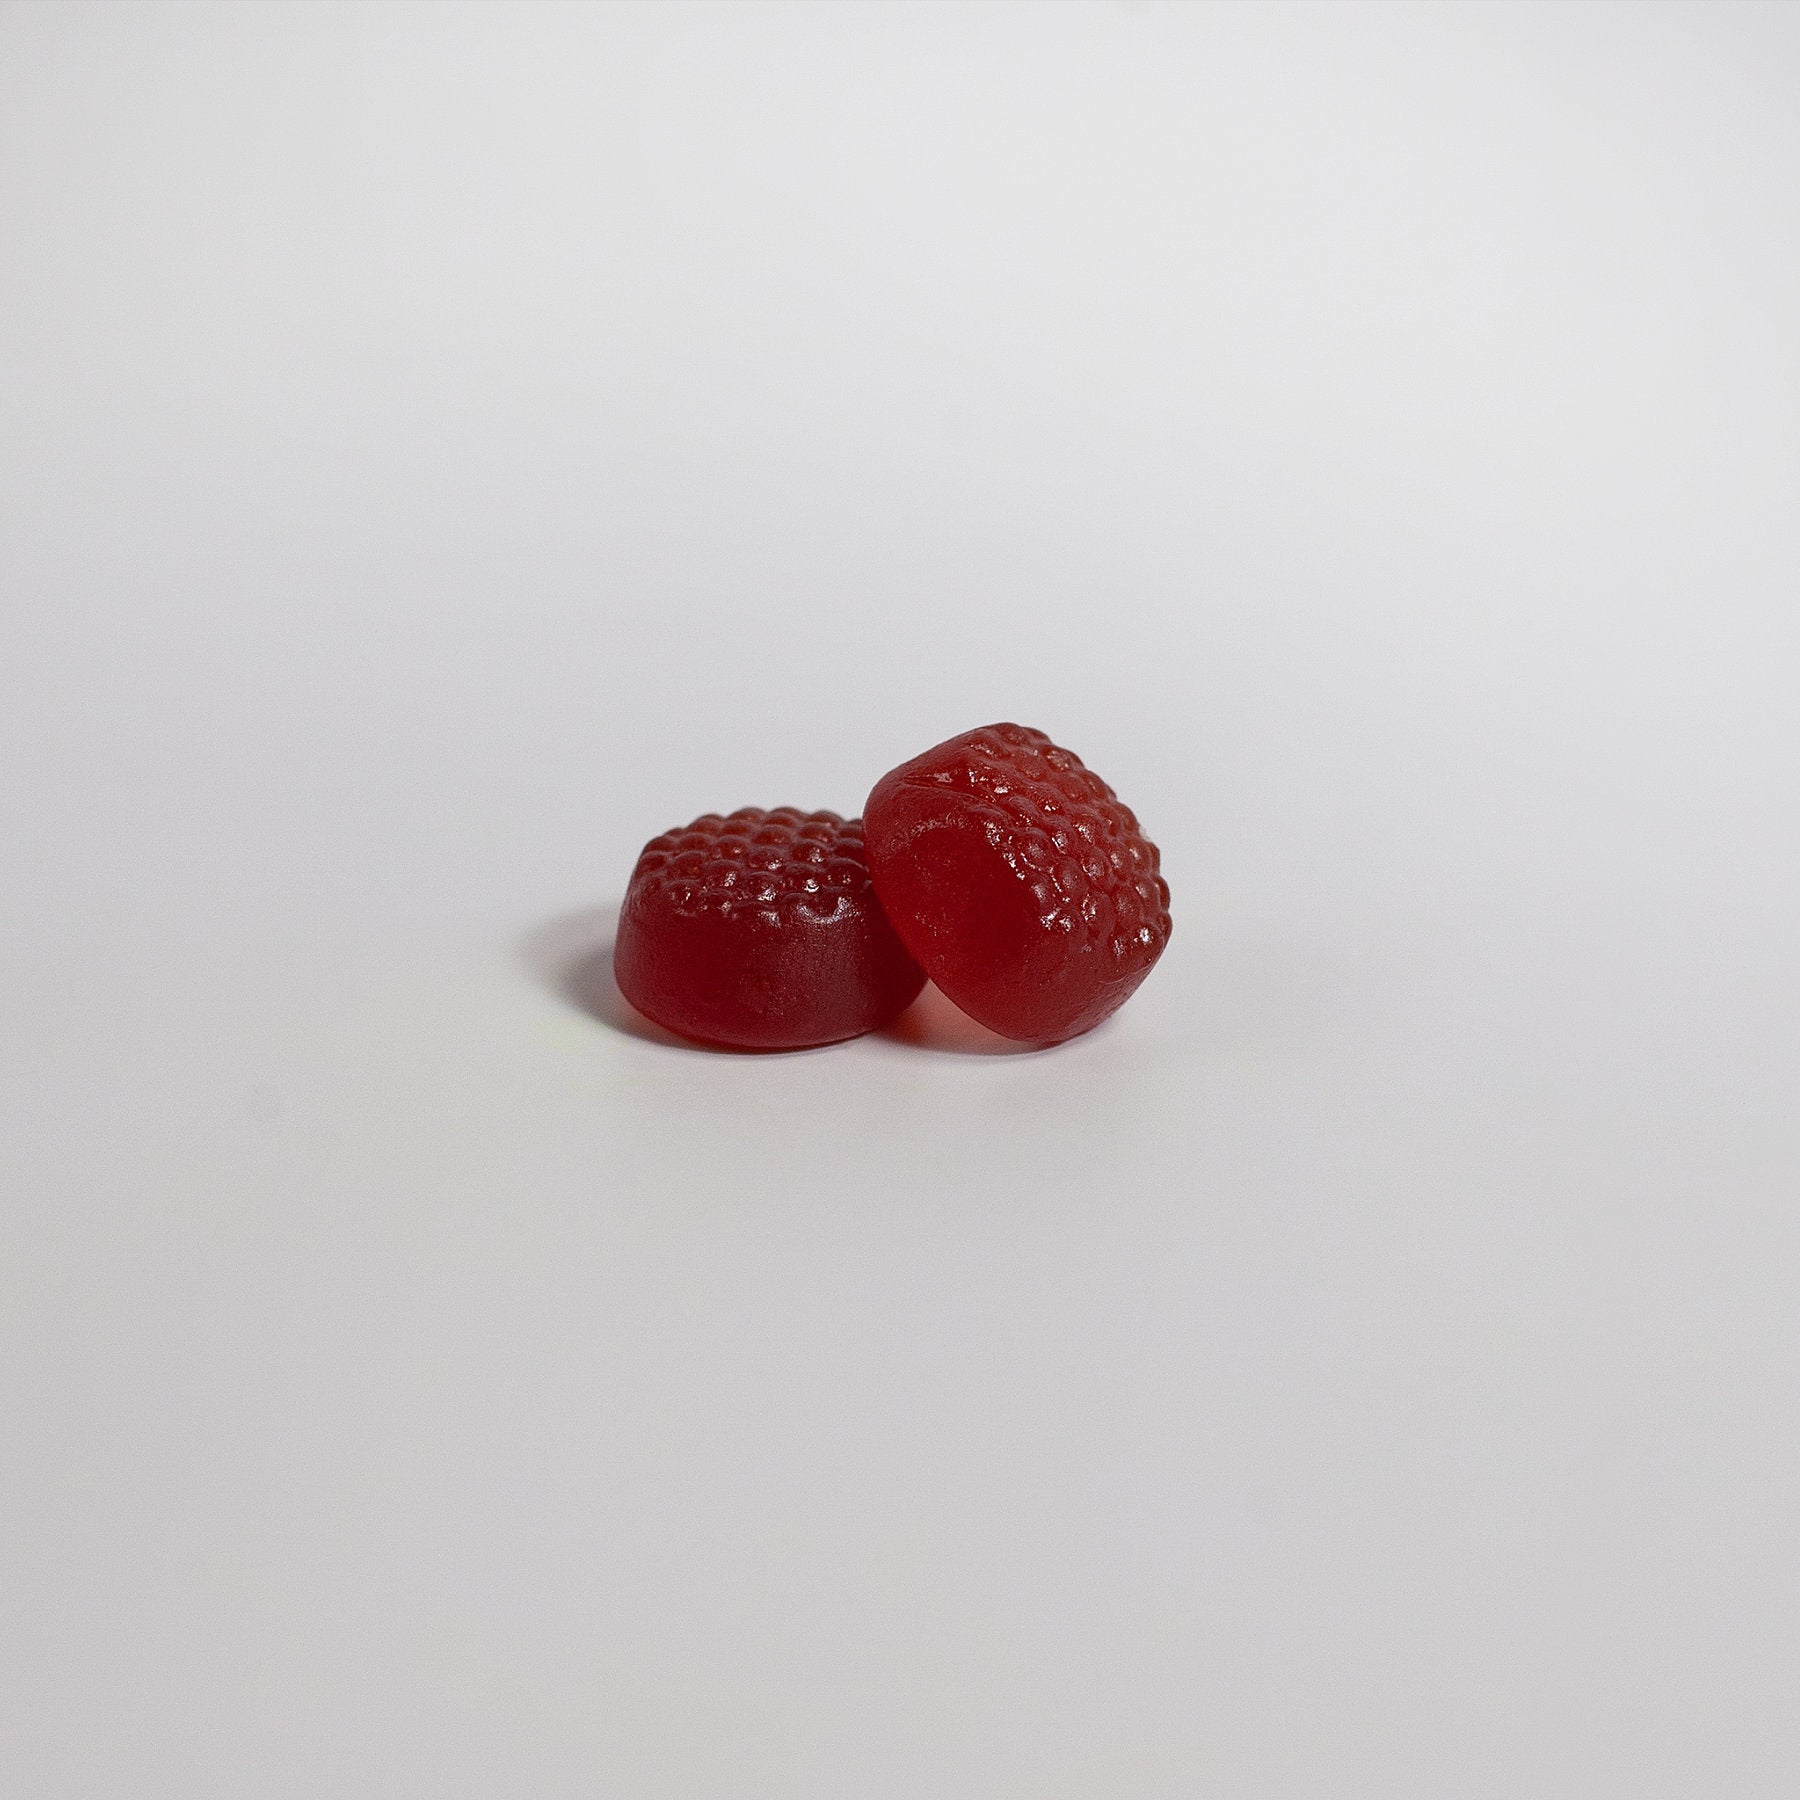 OBEASY™ Elderberry & Vitamin C Gummies